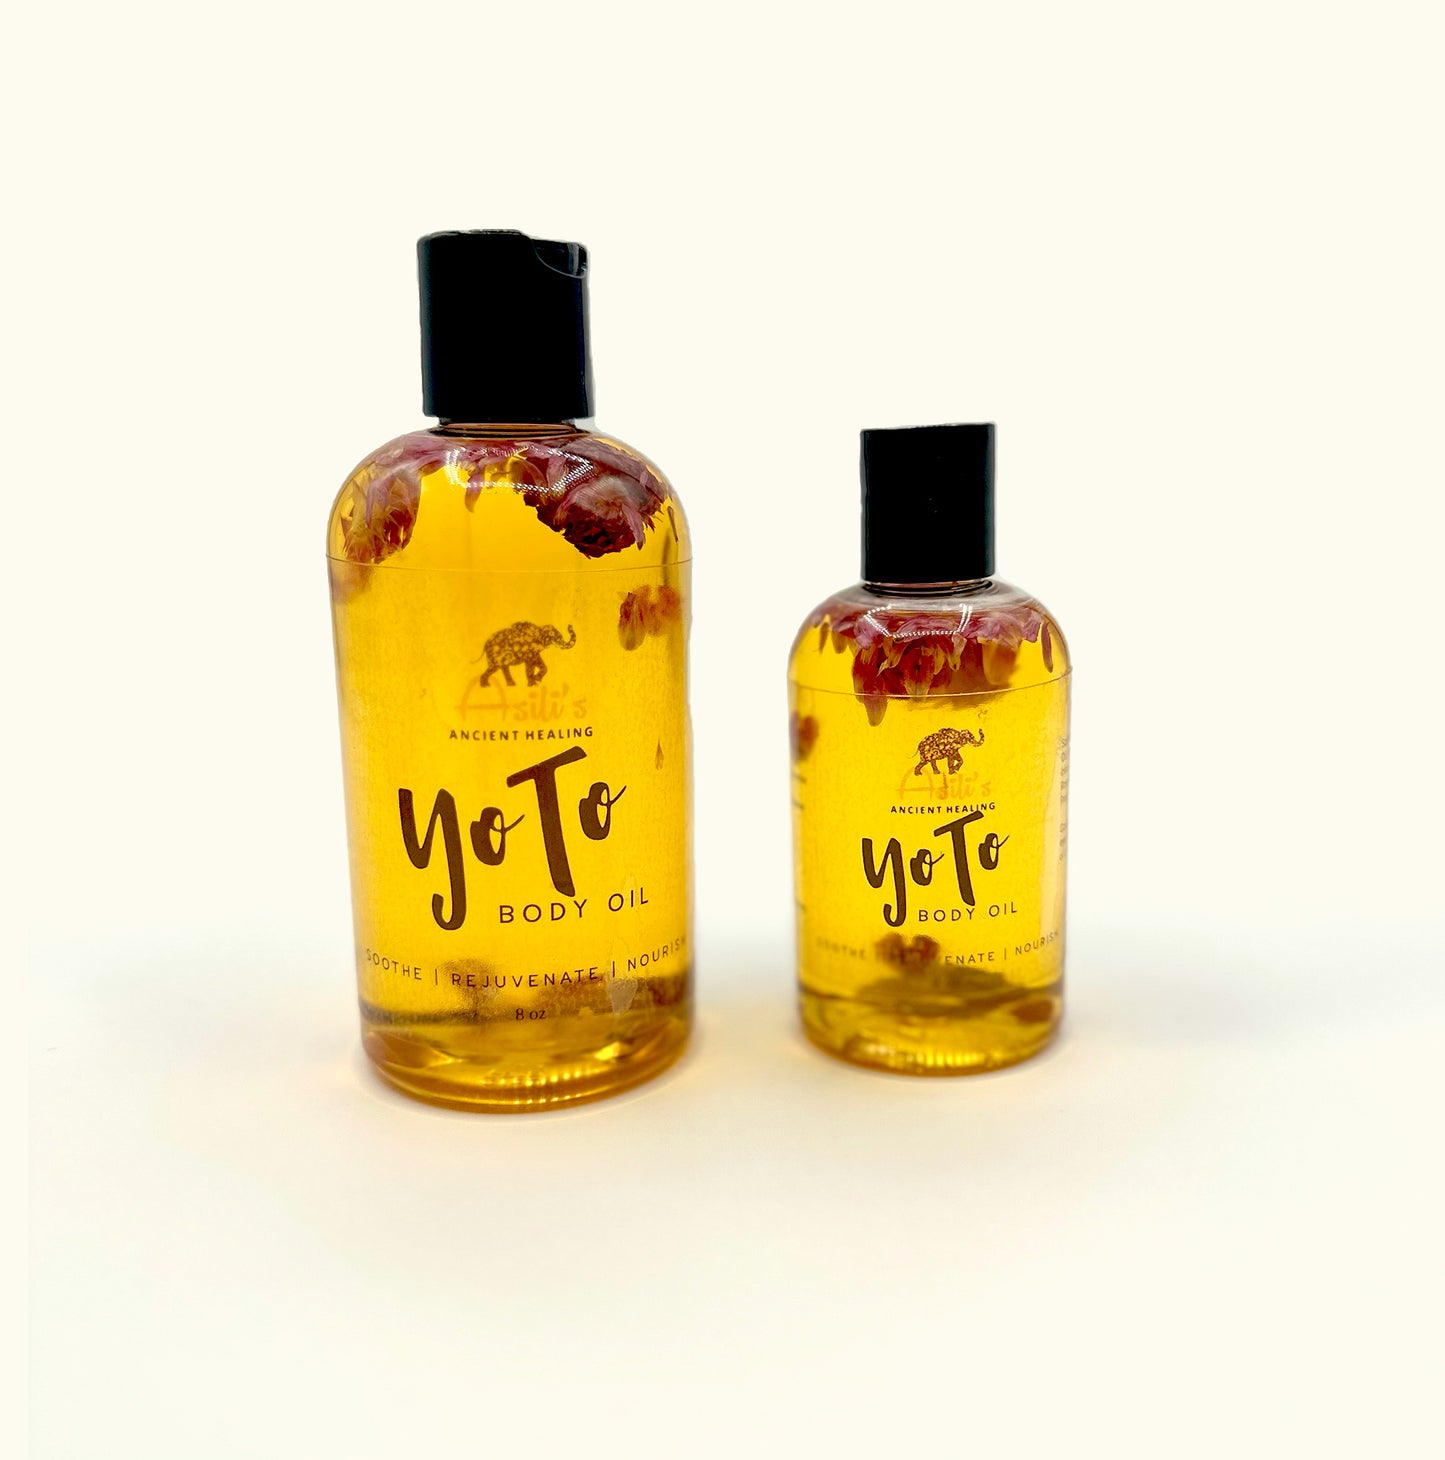 Yoto Body Oil